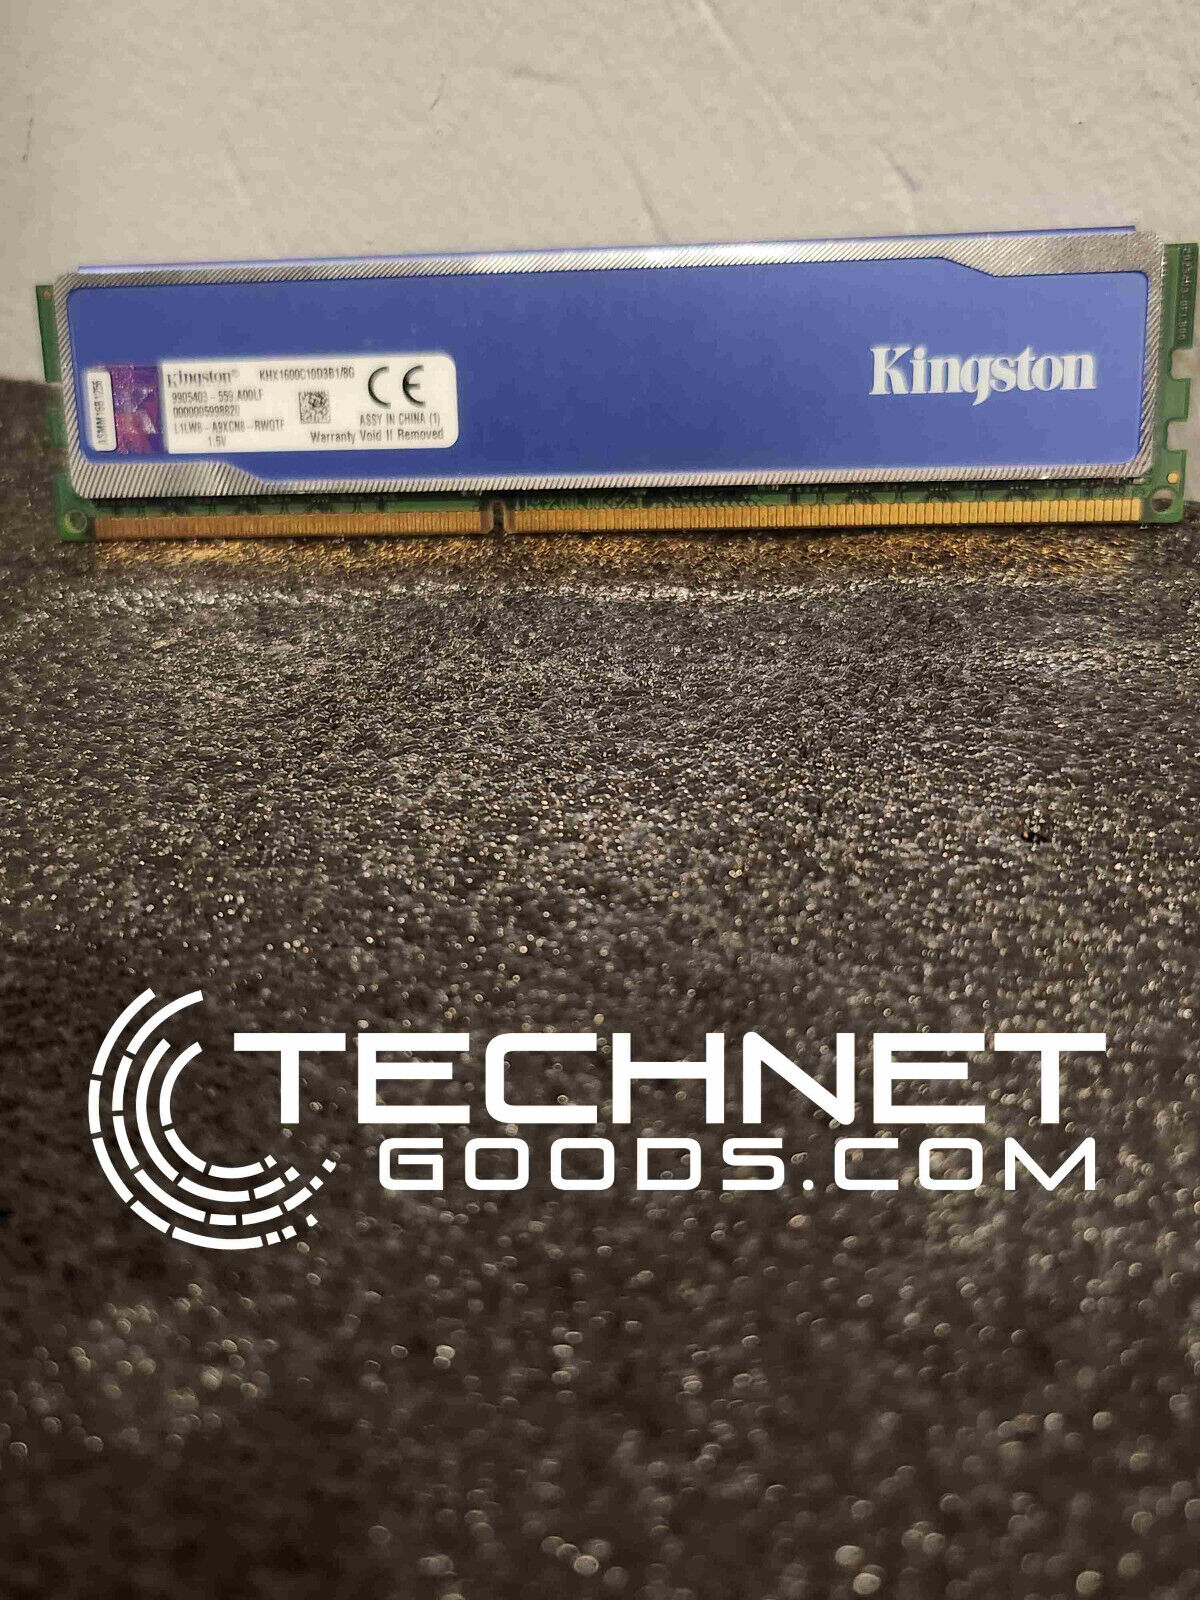 Kingston HyperX Blu 1x8GB DDR3 1600MHz (KHX1600C10D3B1/8G) - TESTED